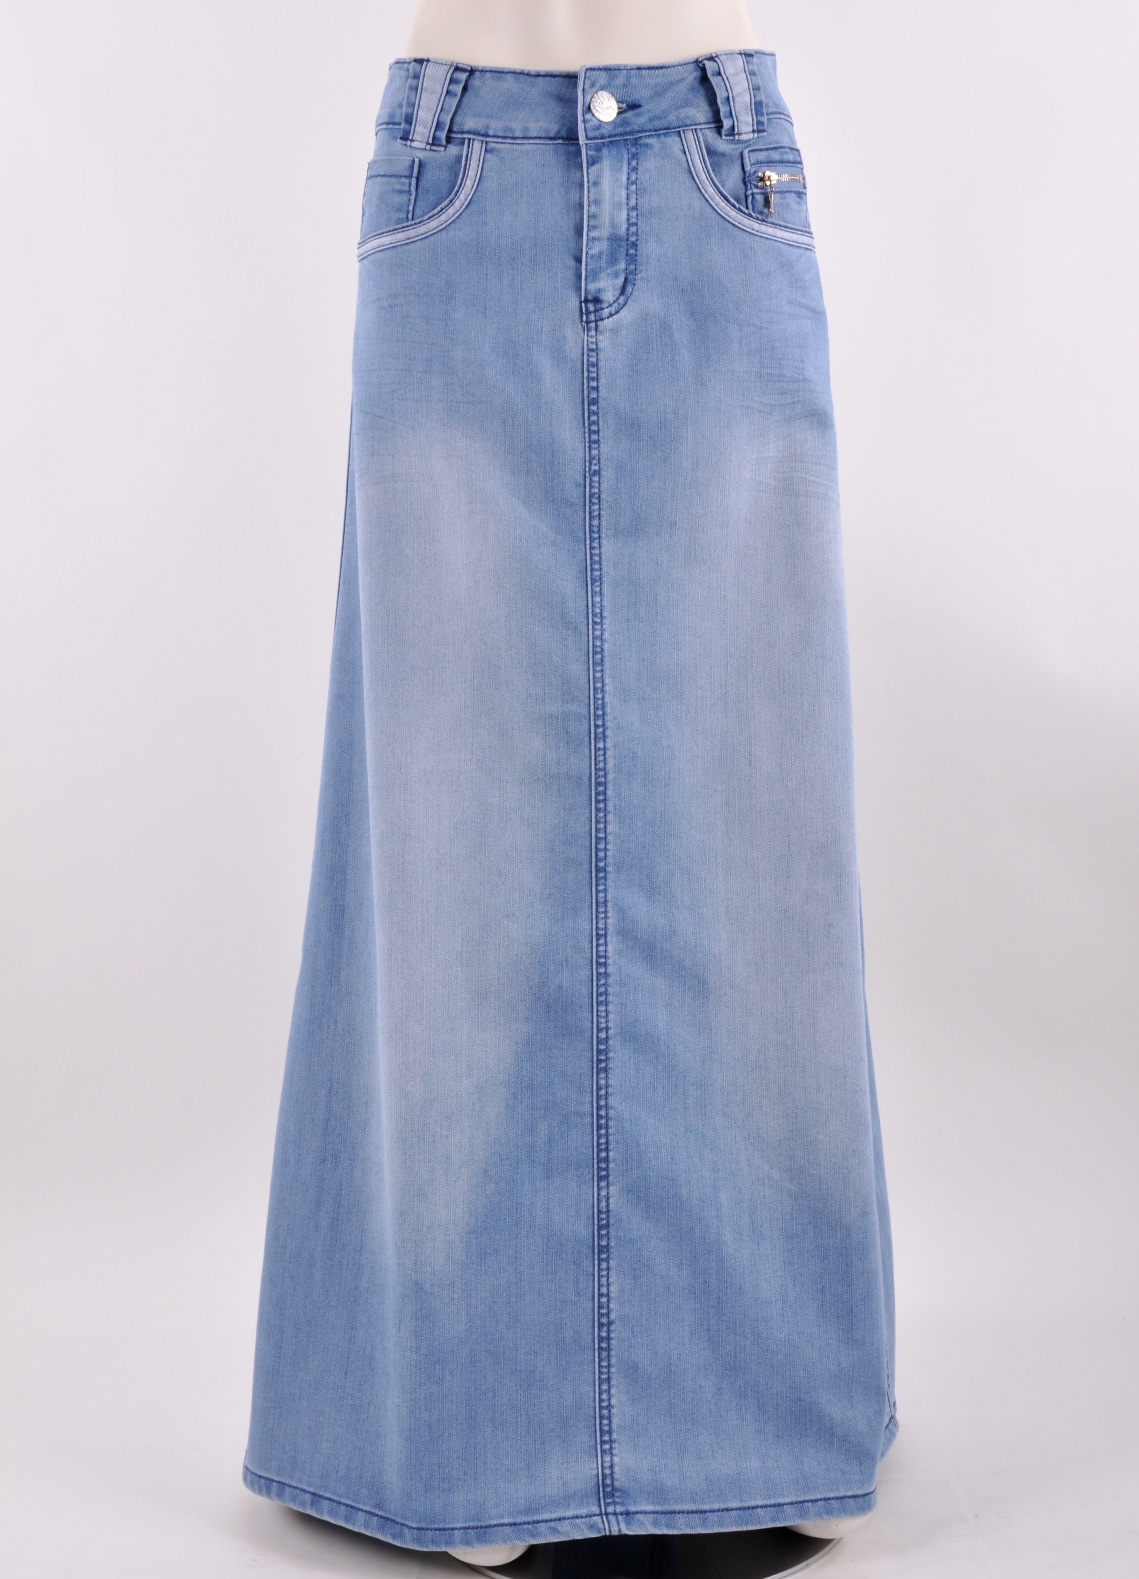 Long Skirts & Dresses: Long Jean Skirts